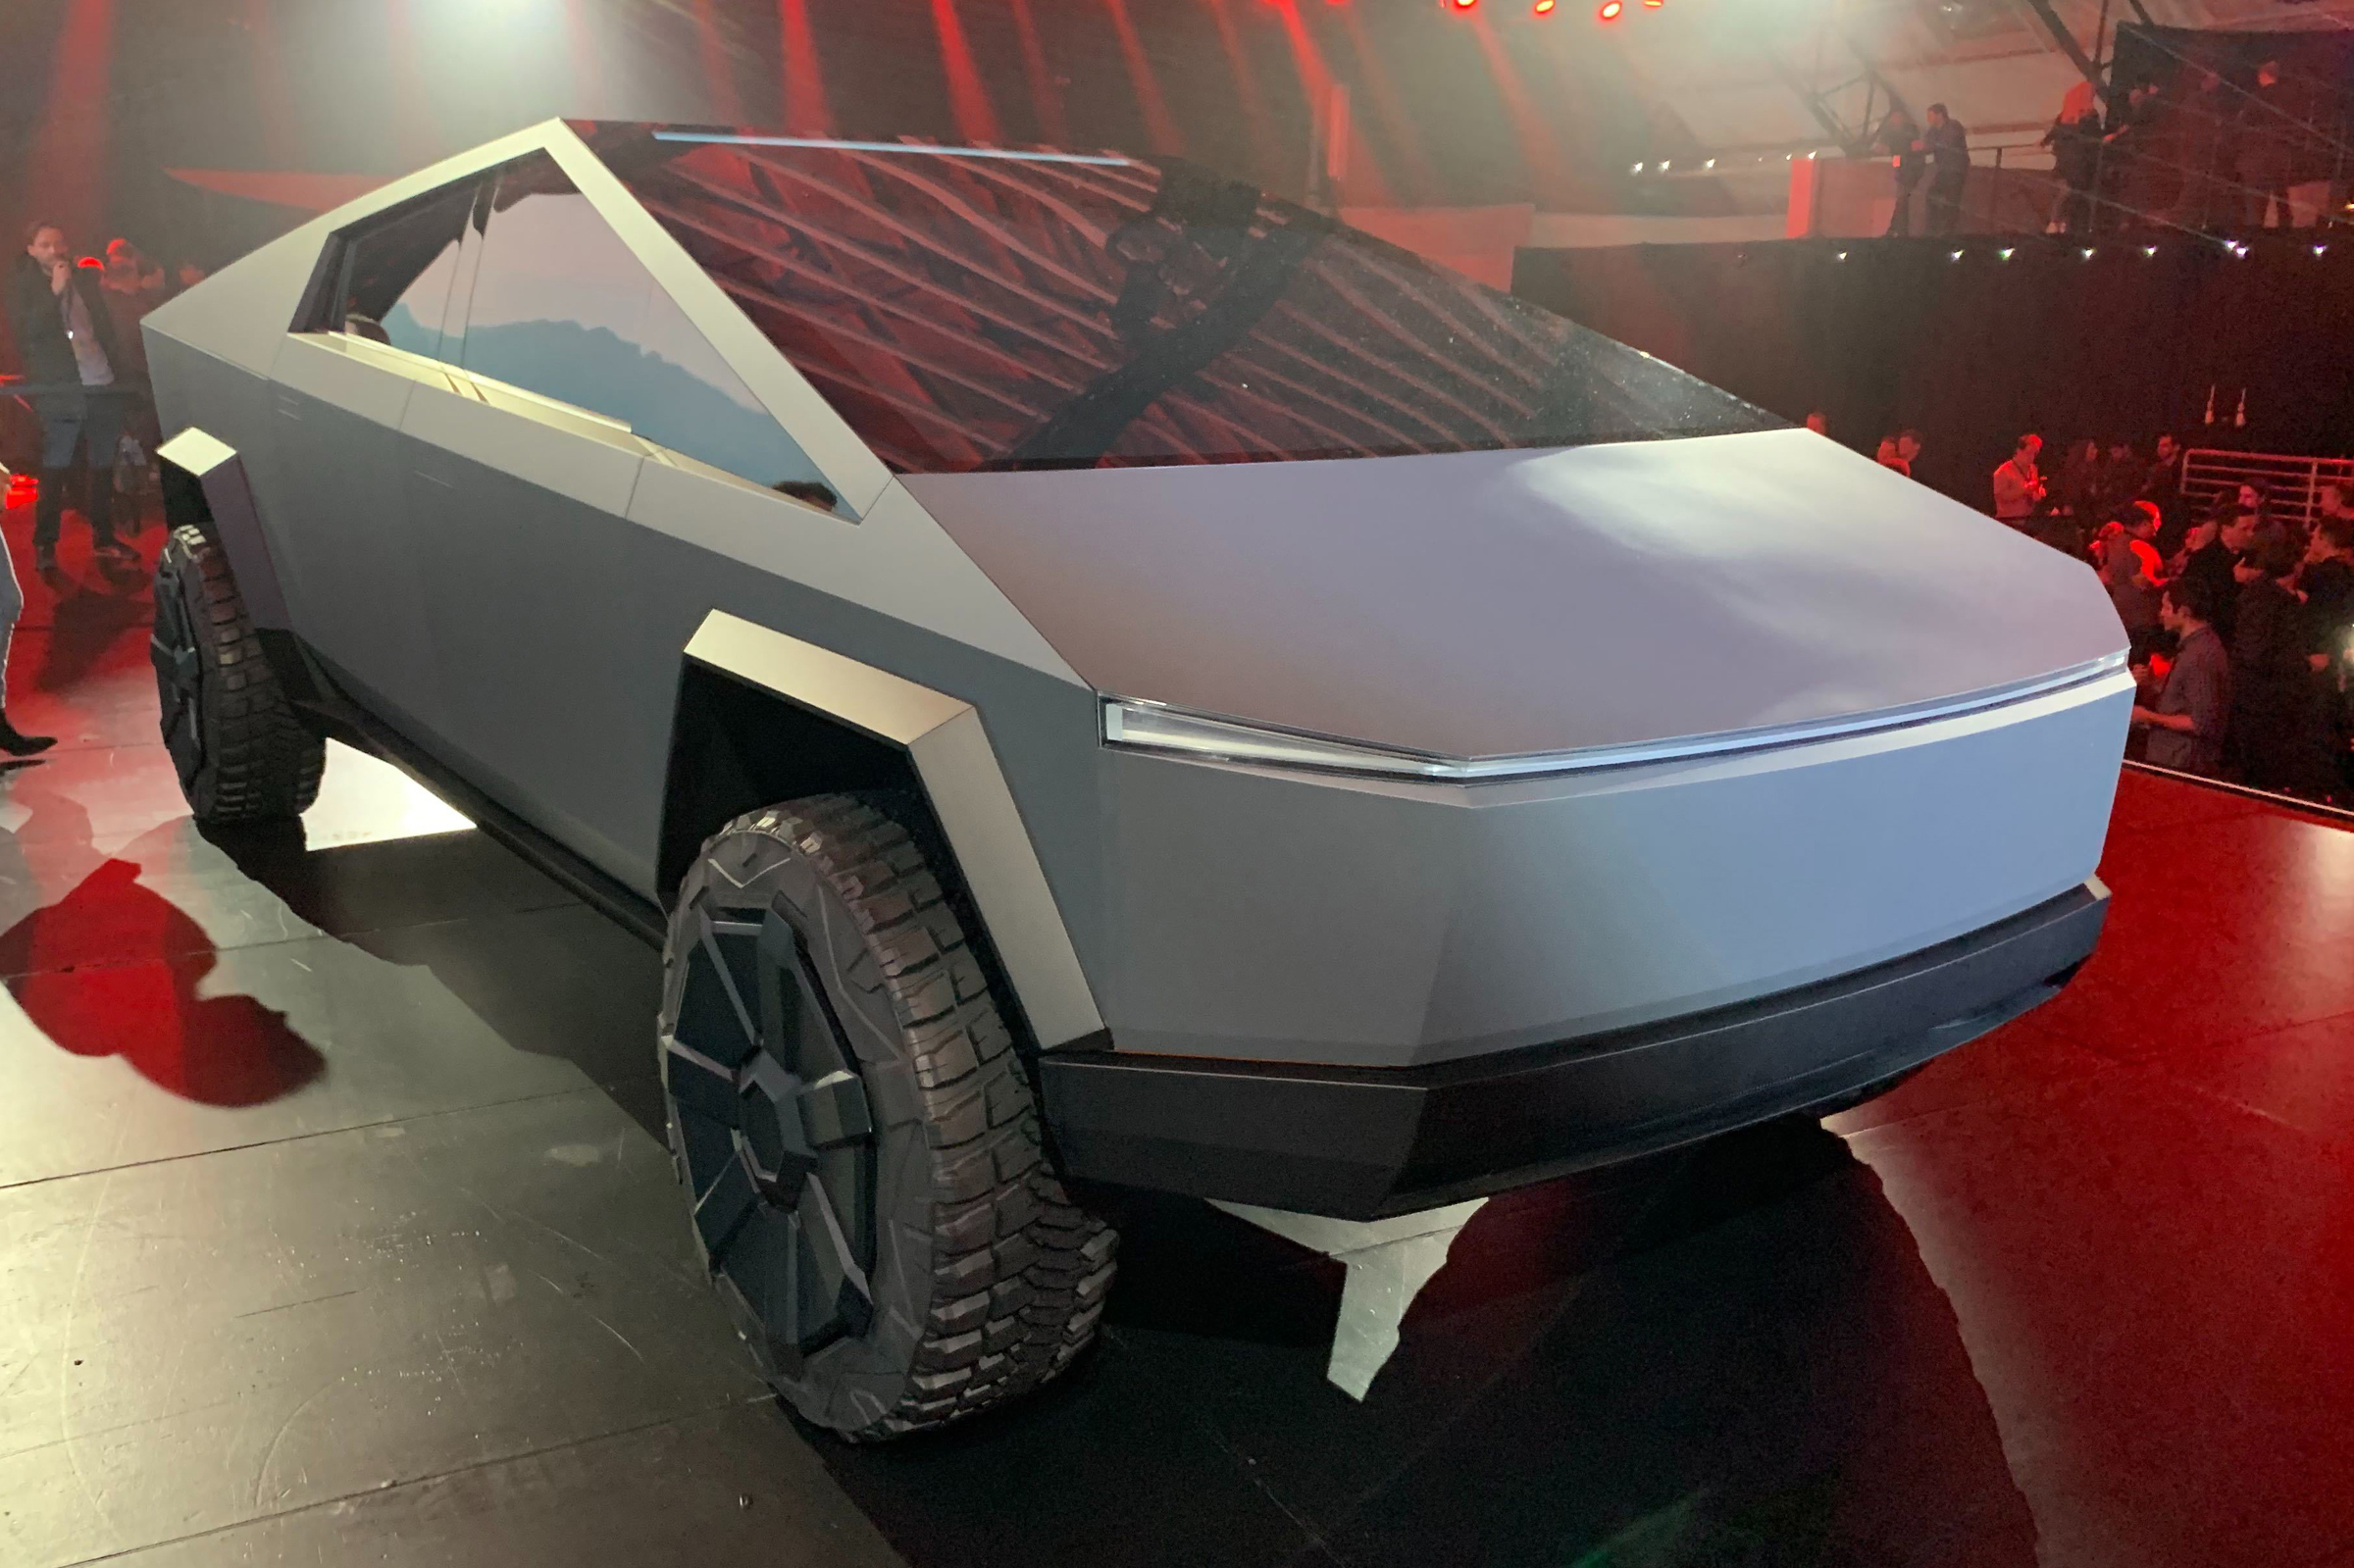 New Tesla Cybertruck pickup breaks cover full details and